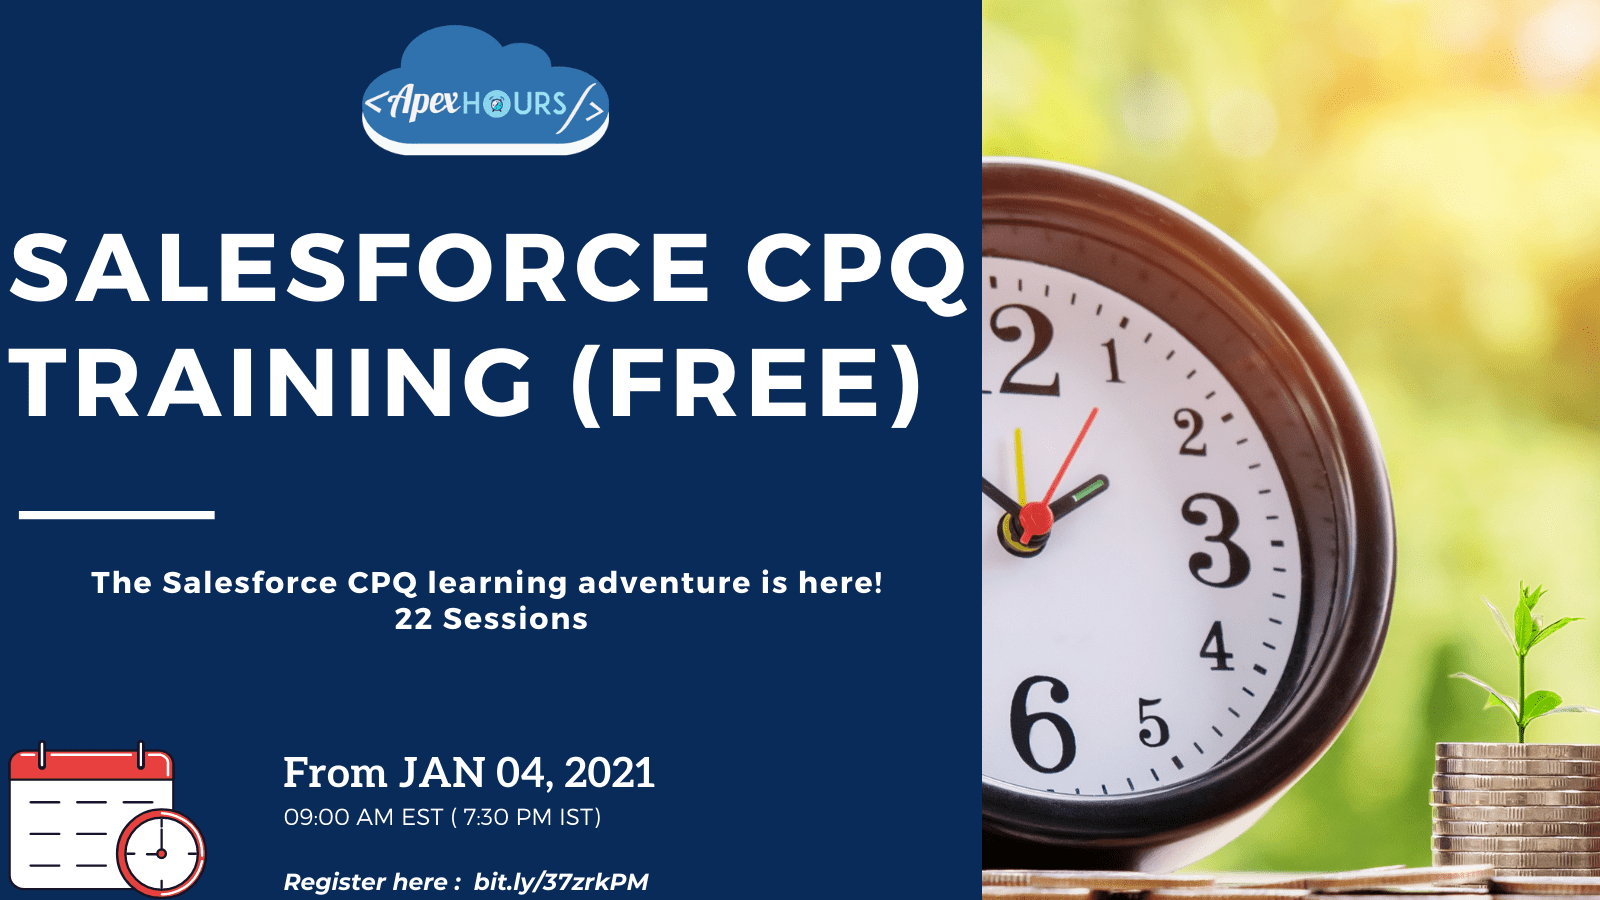 Salesforce CPQ Training Free.